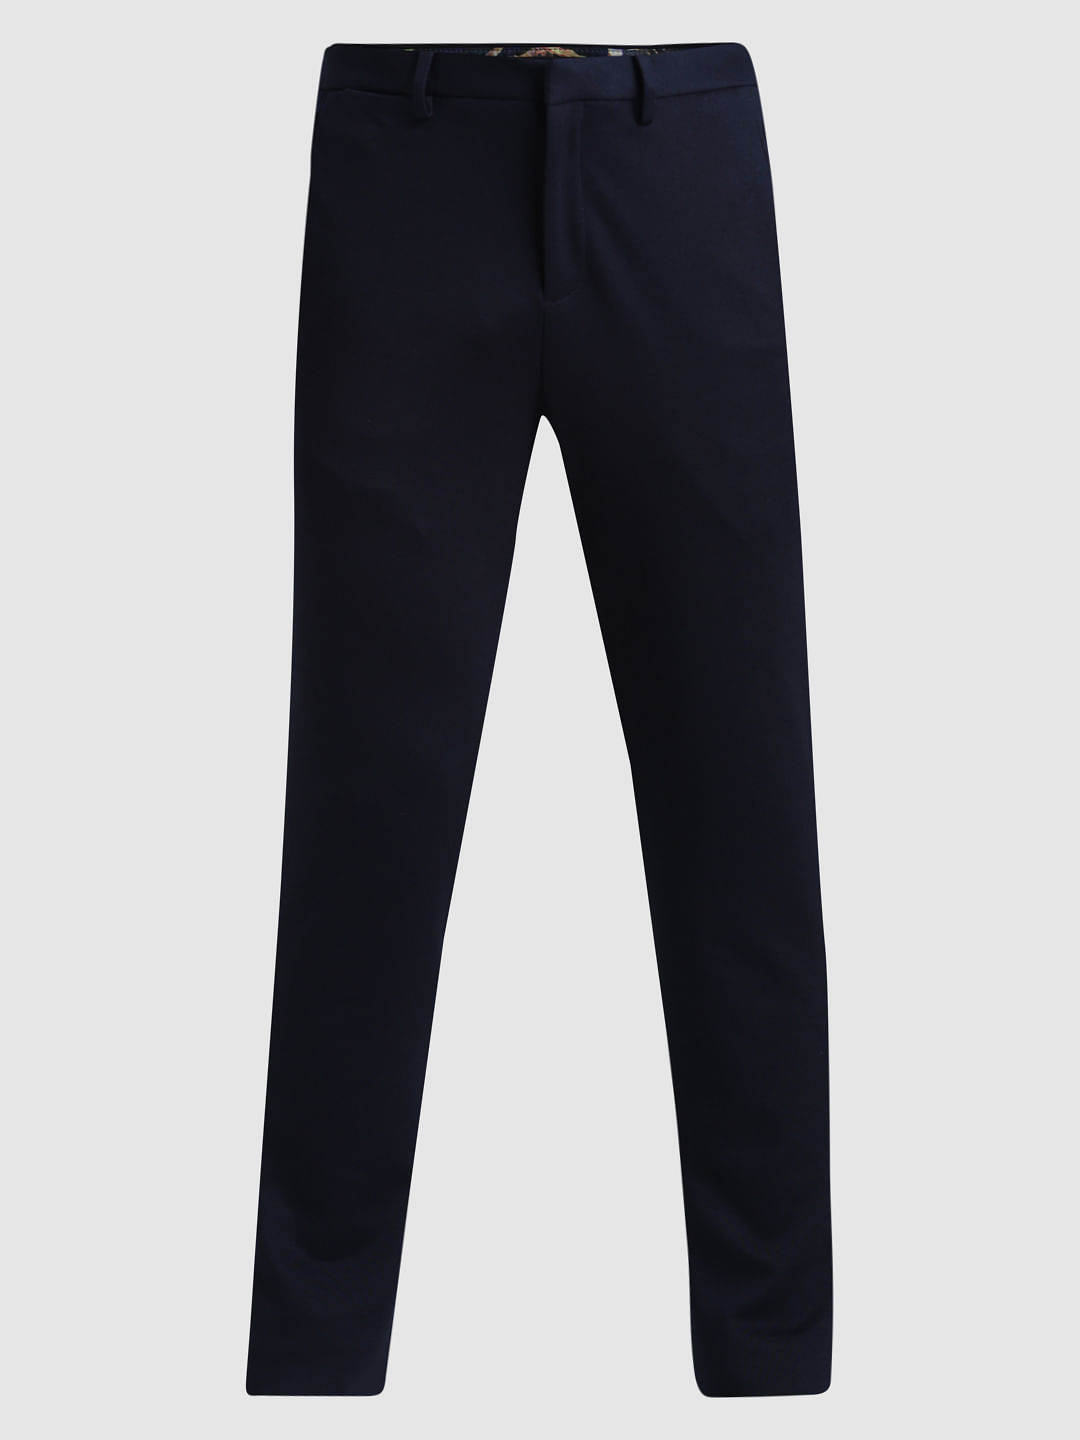 Buy Black Trousers & Pants for Men by iVOC Online | Ajio.com